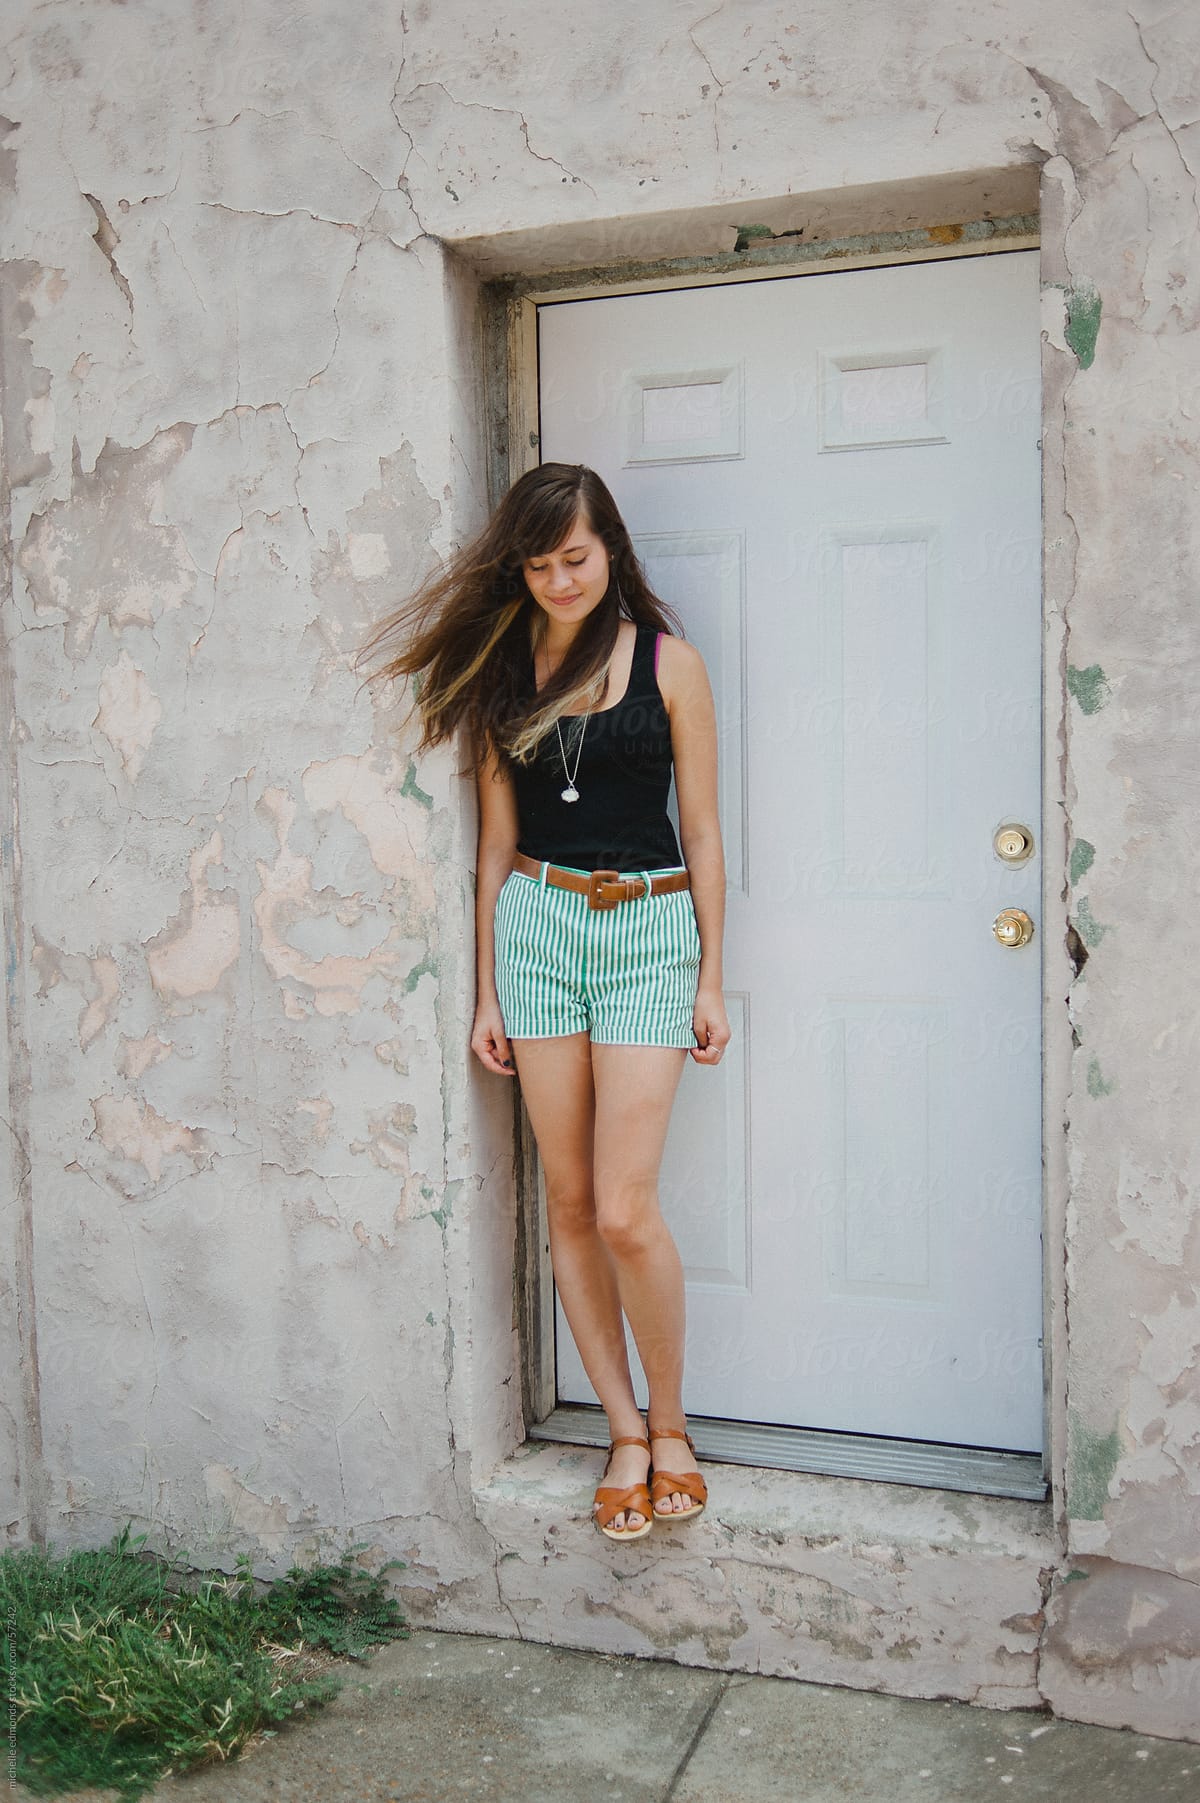 Girl Standing In Doorway By Stocksy Contributor Michelle Edmonds Stocksy